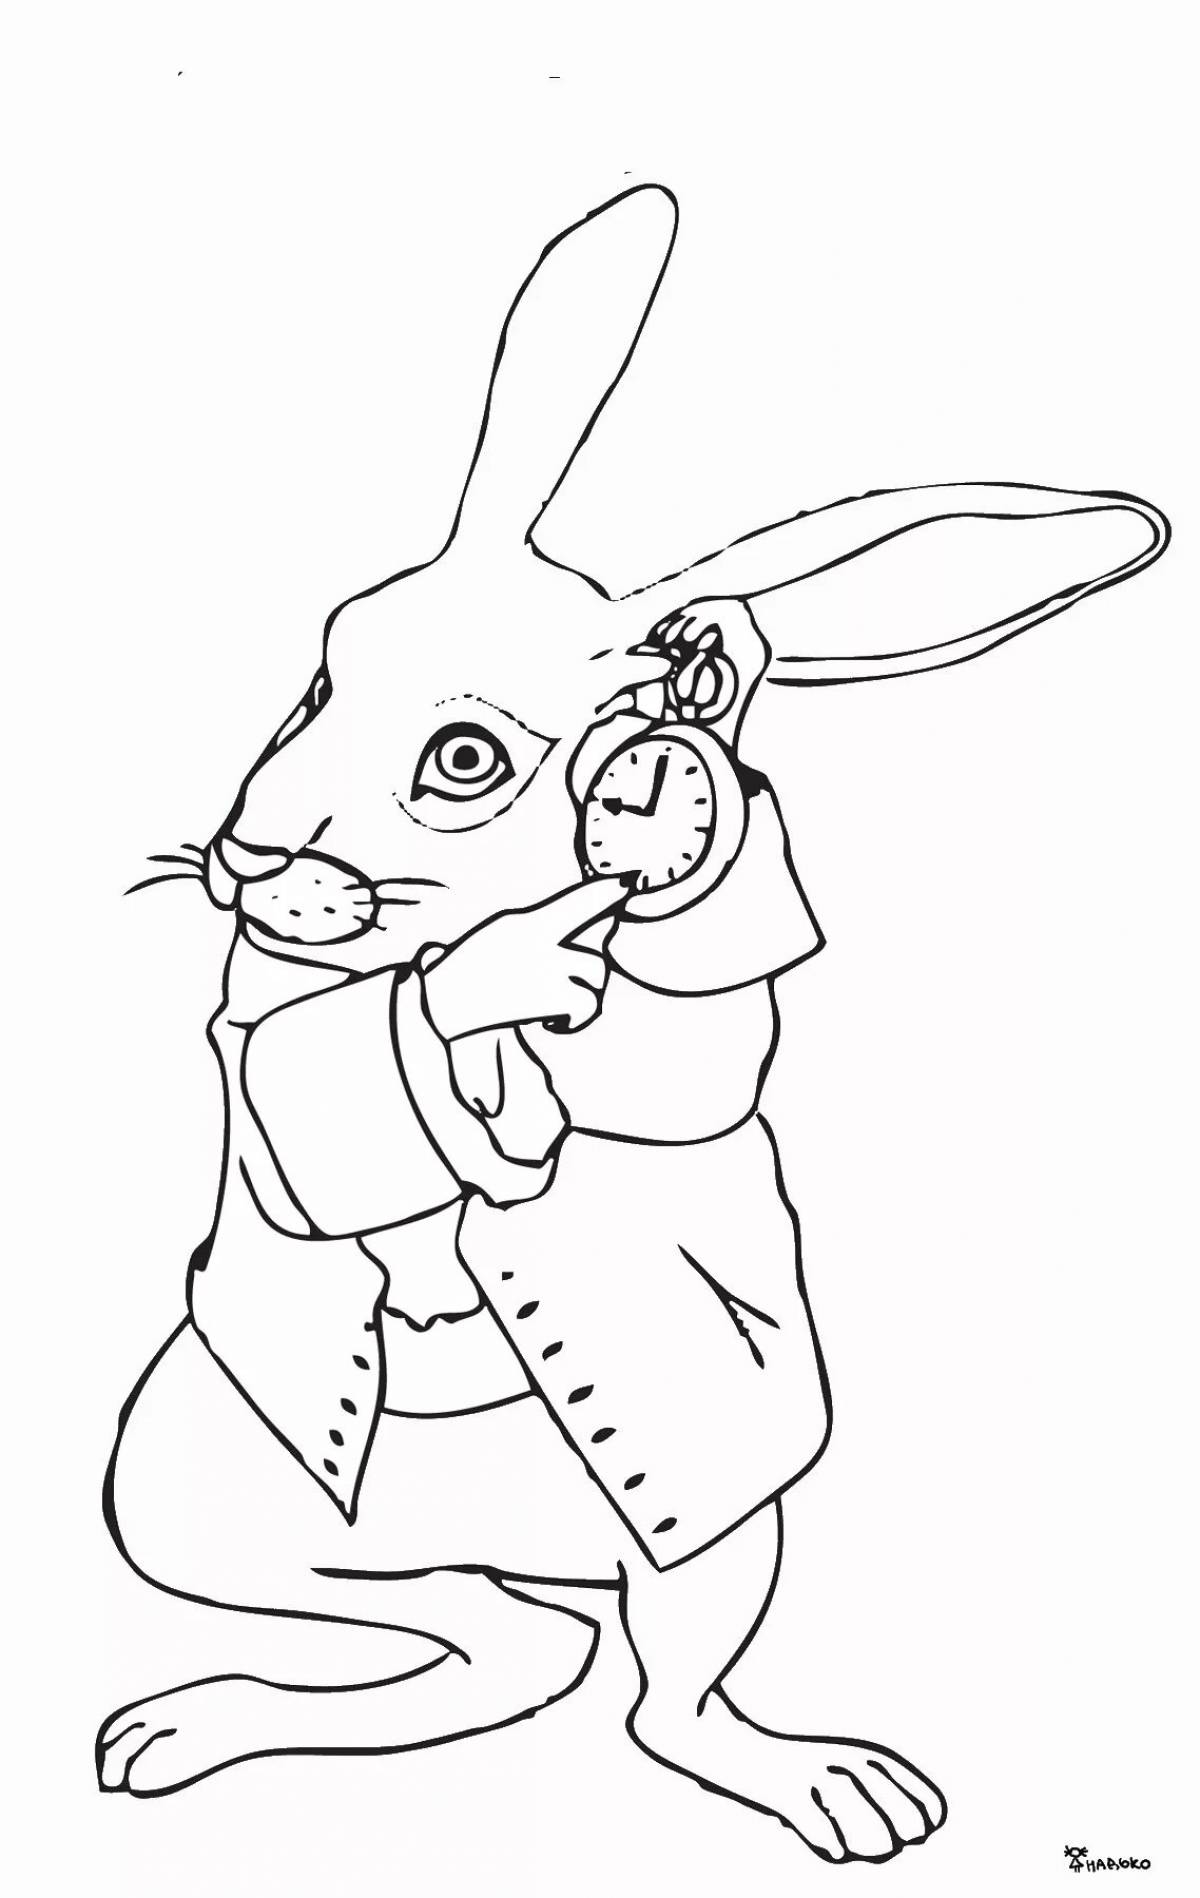 Bunny from alice in wonderland #14